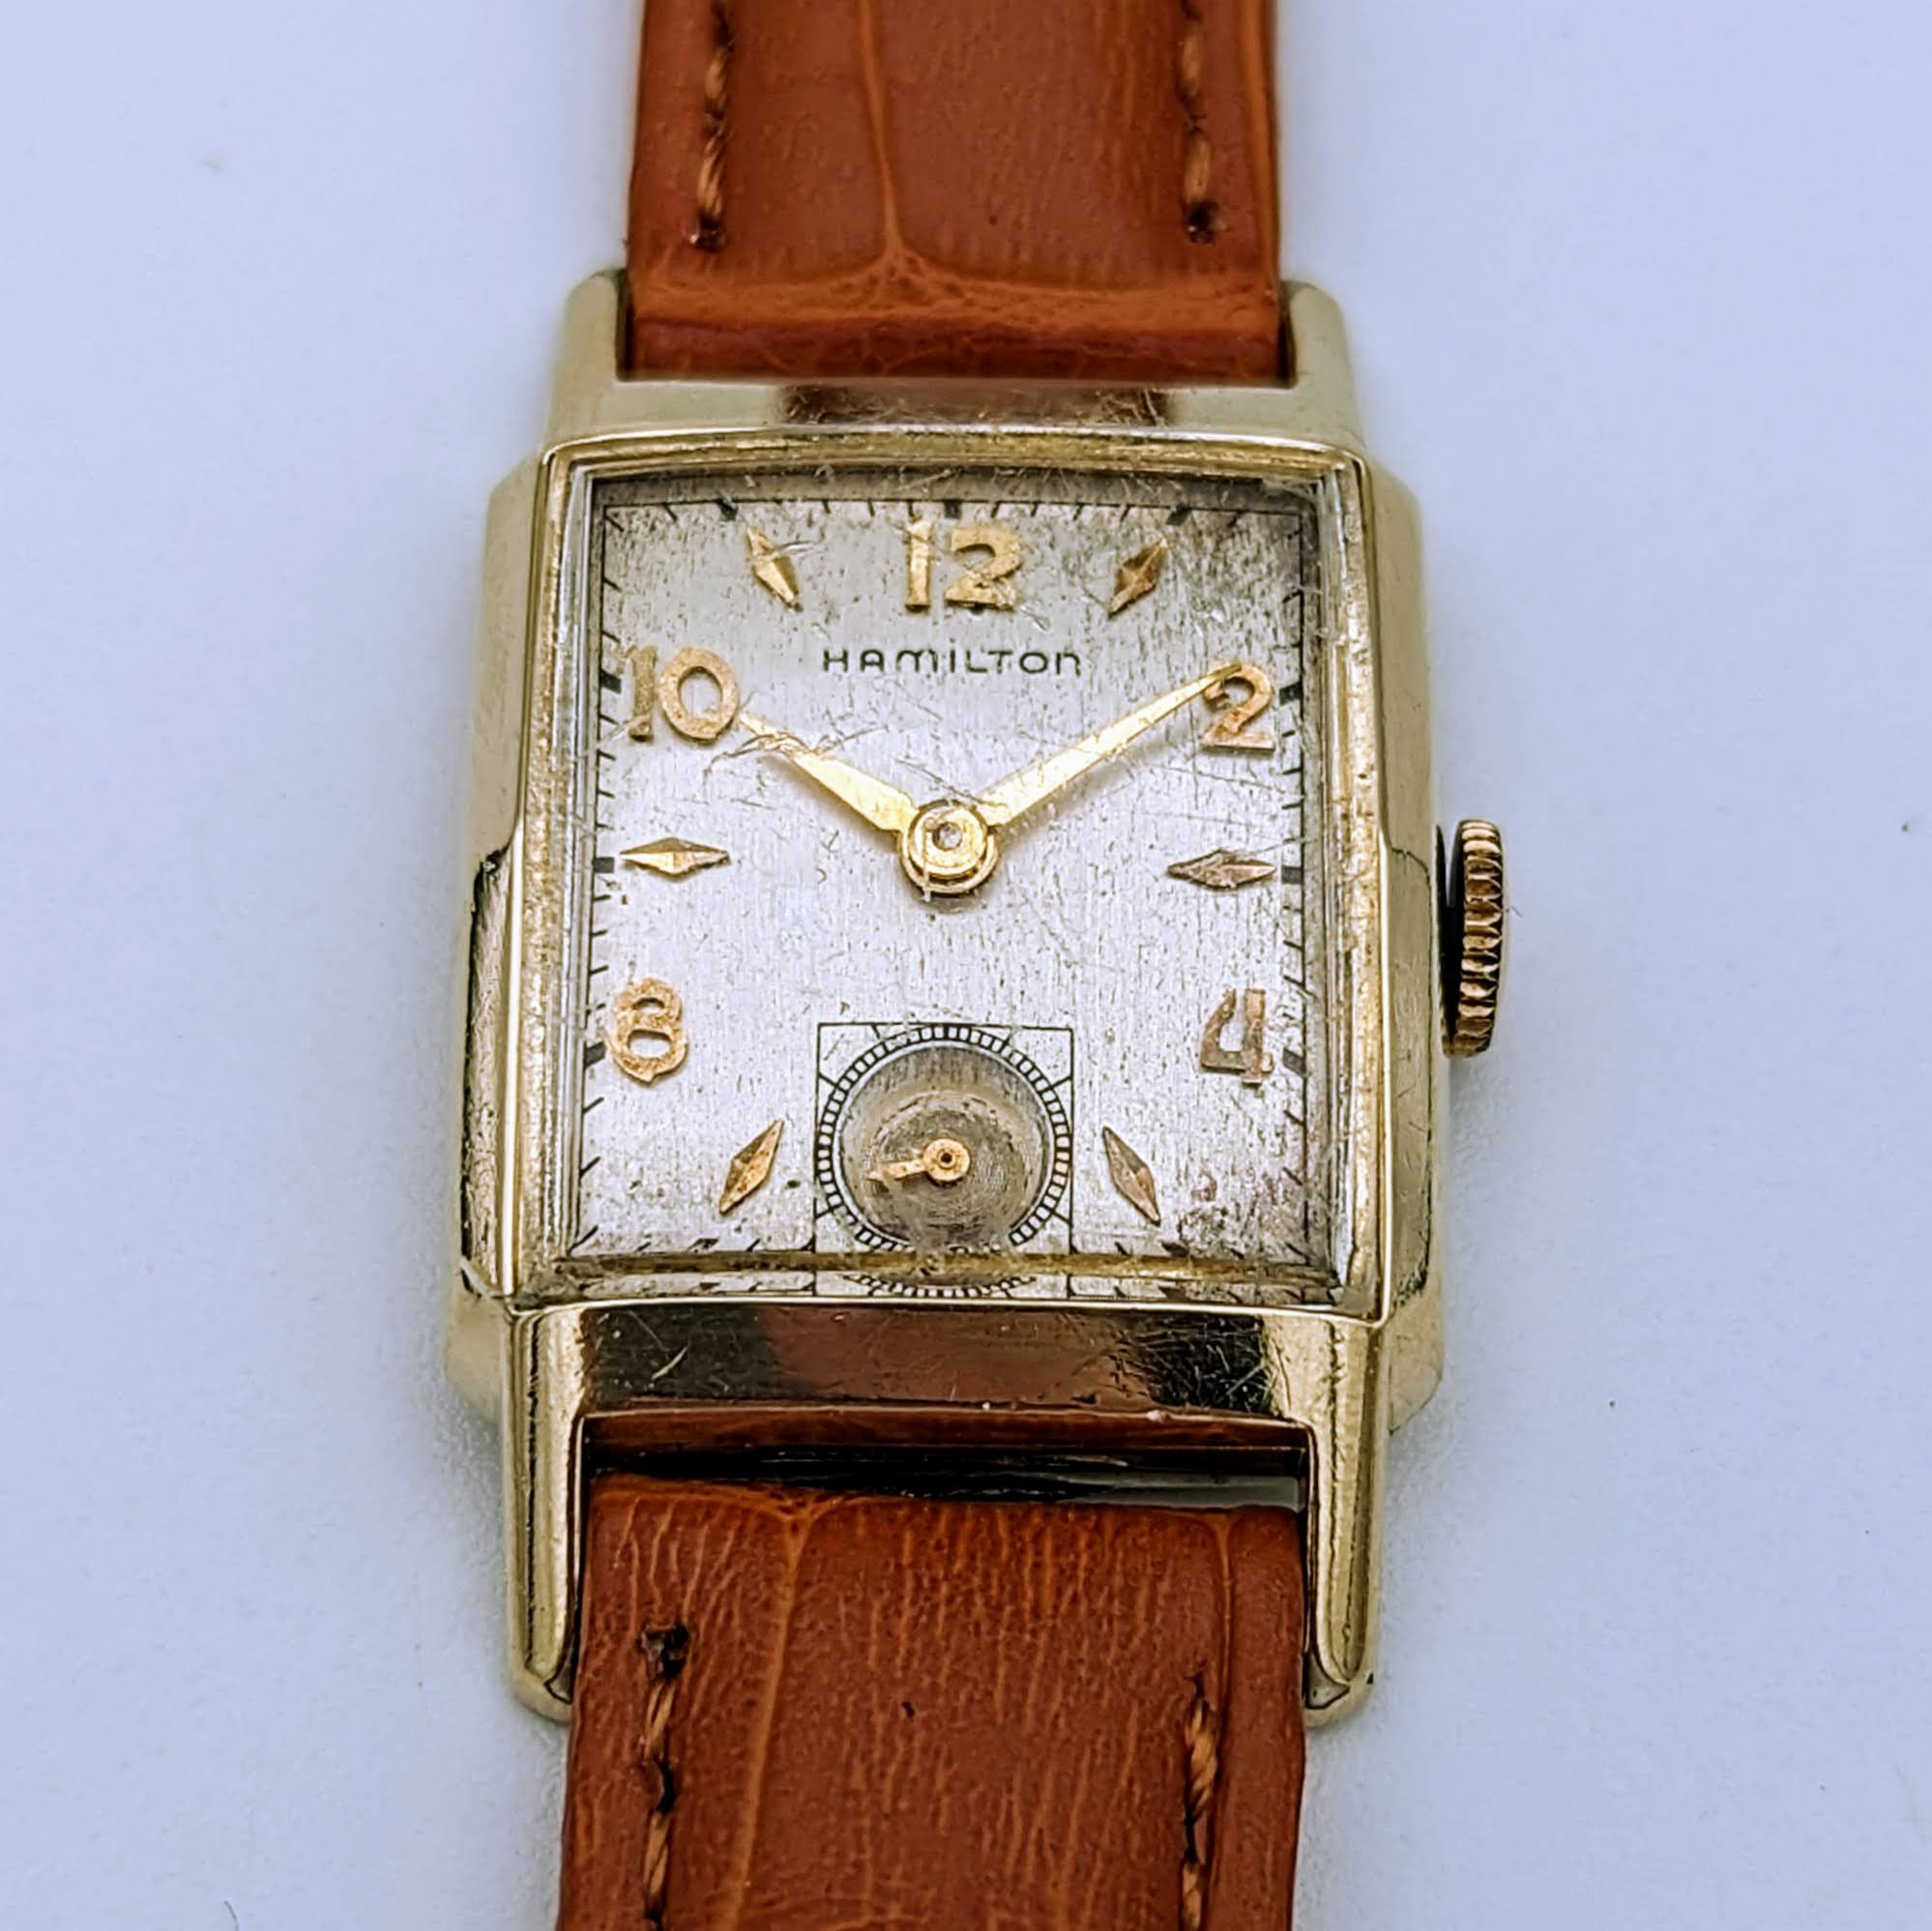 1951 Hamilton Brent Wristwatch 14K GF Grade 982 19 Jewels Watch